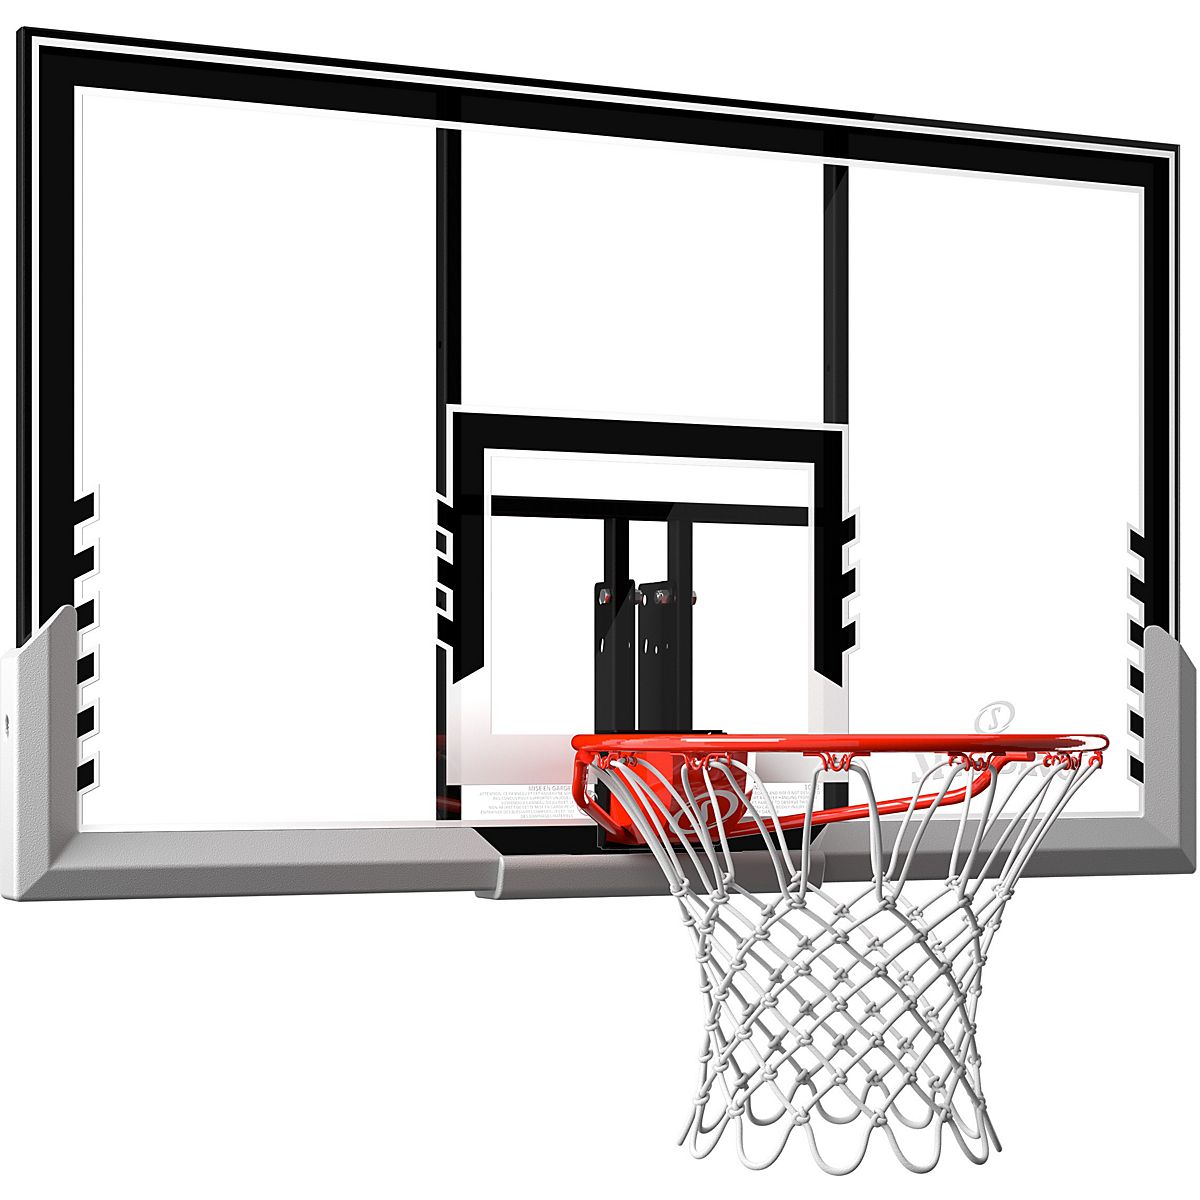 Young man on basketball court, swinging on basketball net frame